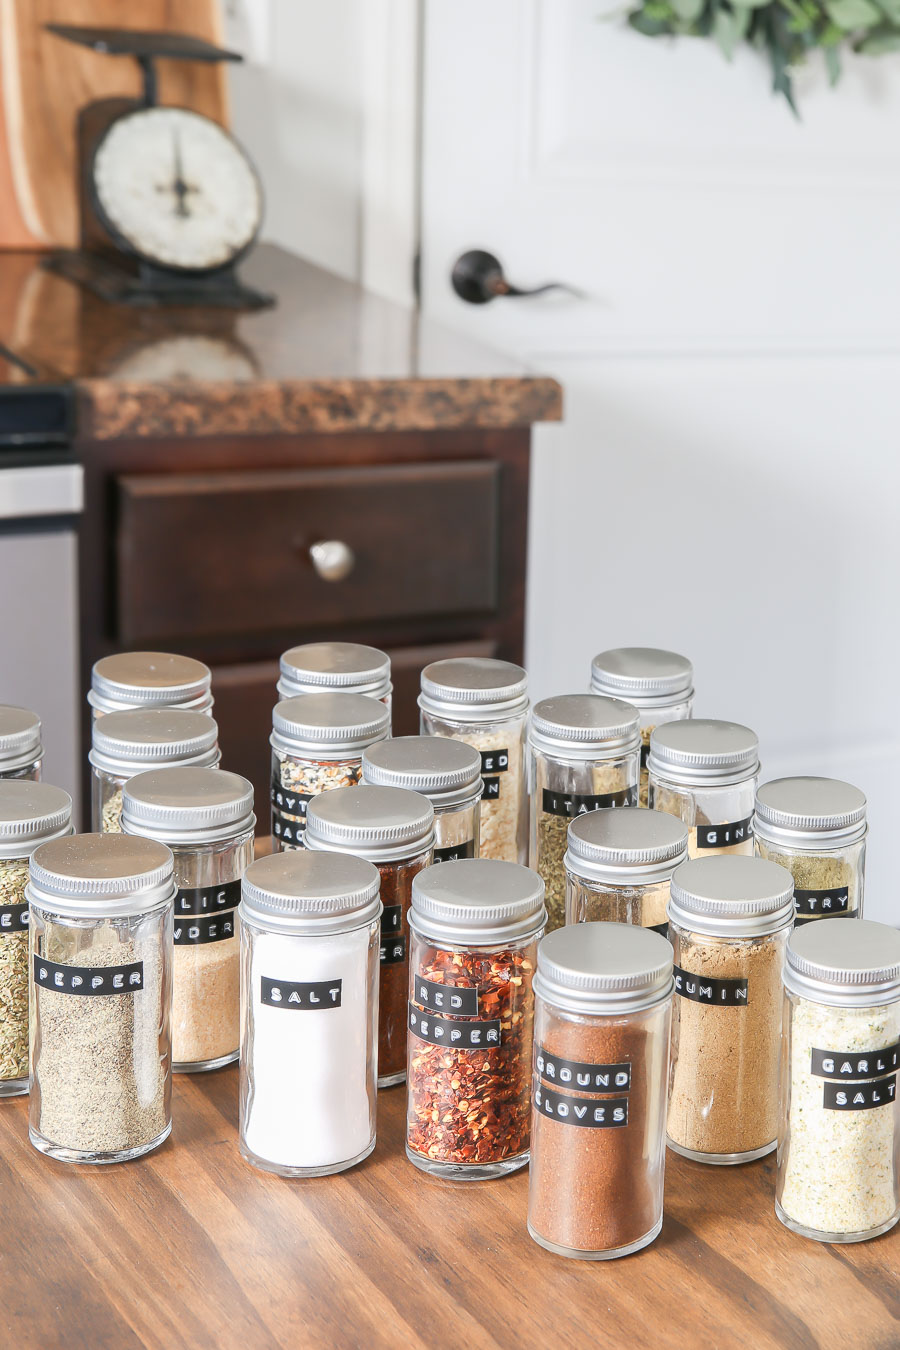 https://www.littleglassjar.com/wp-content/uploads/2020/02/How-to-Organize-Spices-11.jpg